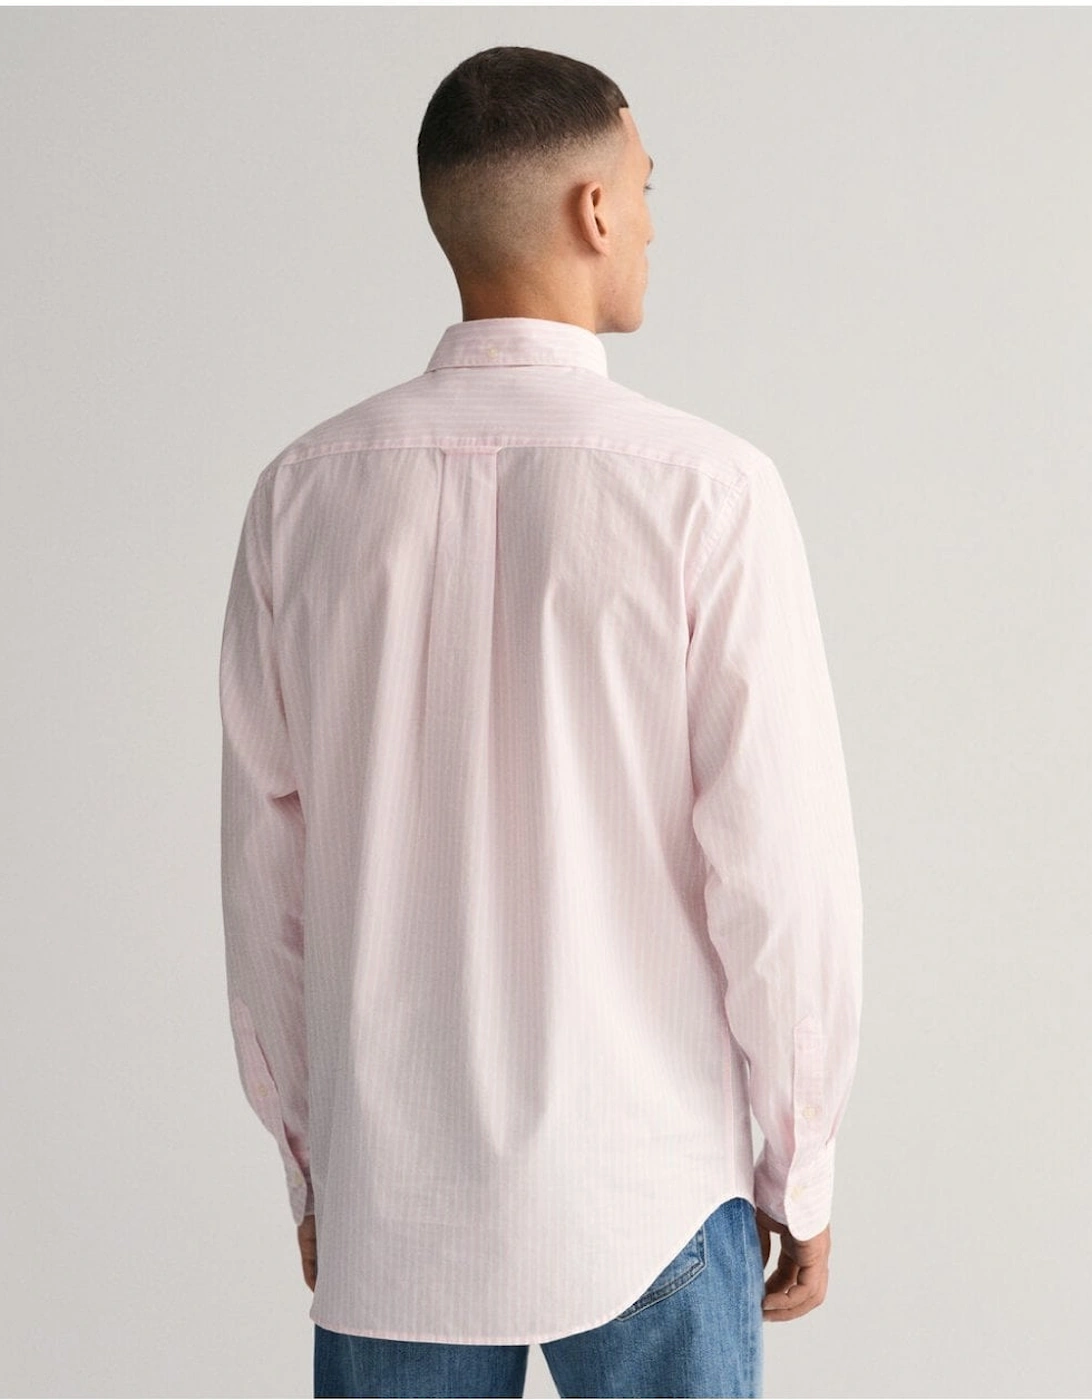 Regular Fit Striped Poplin Light Pink Shirt